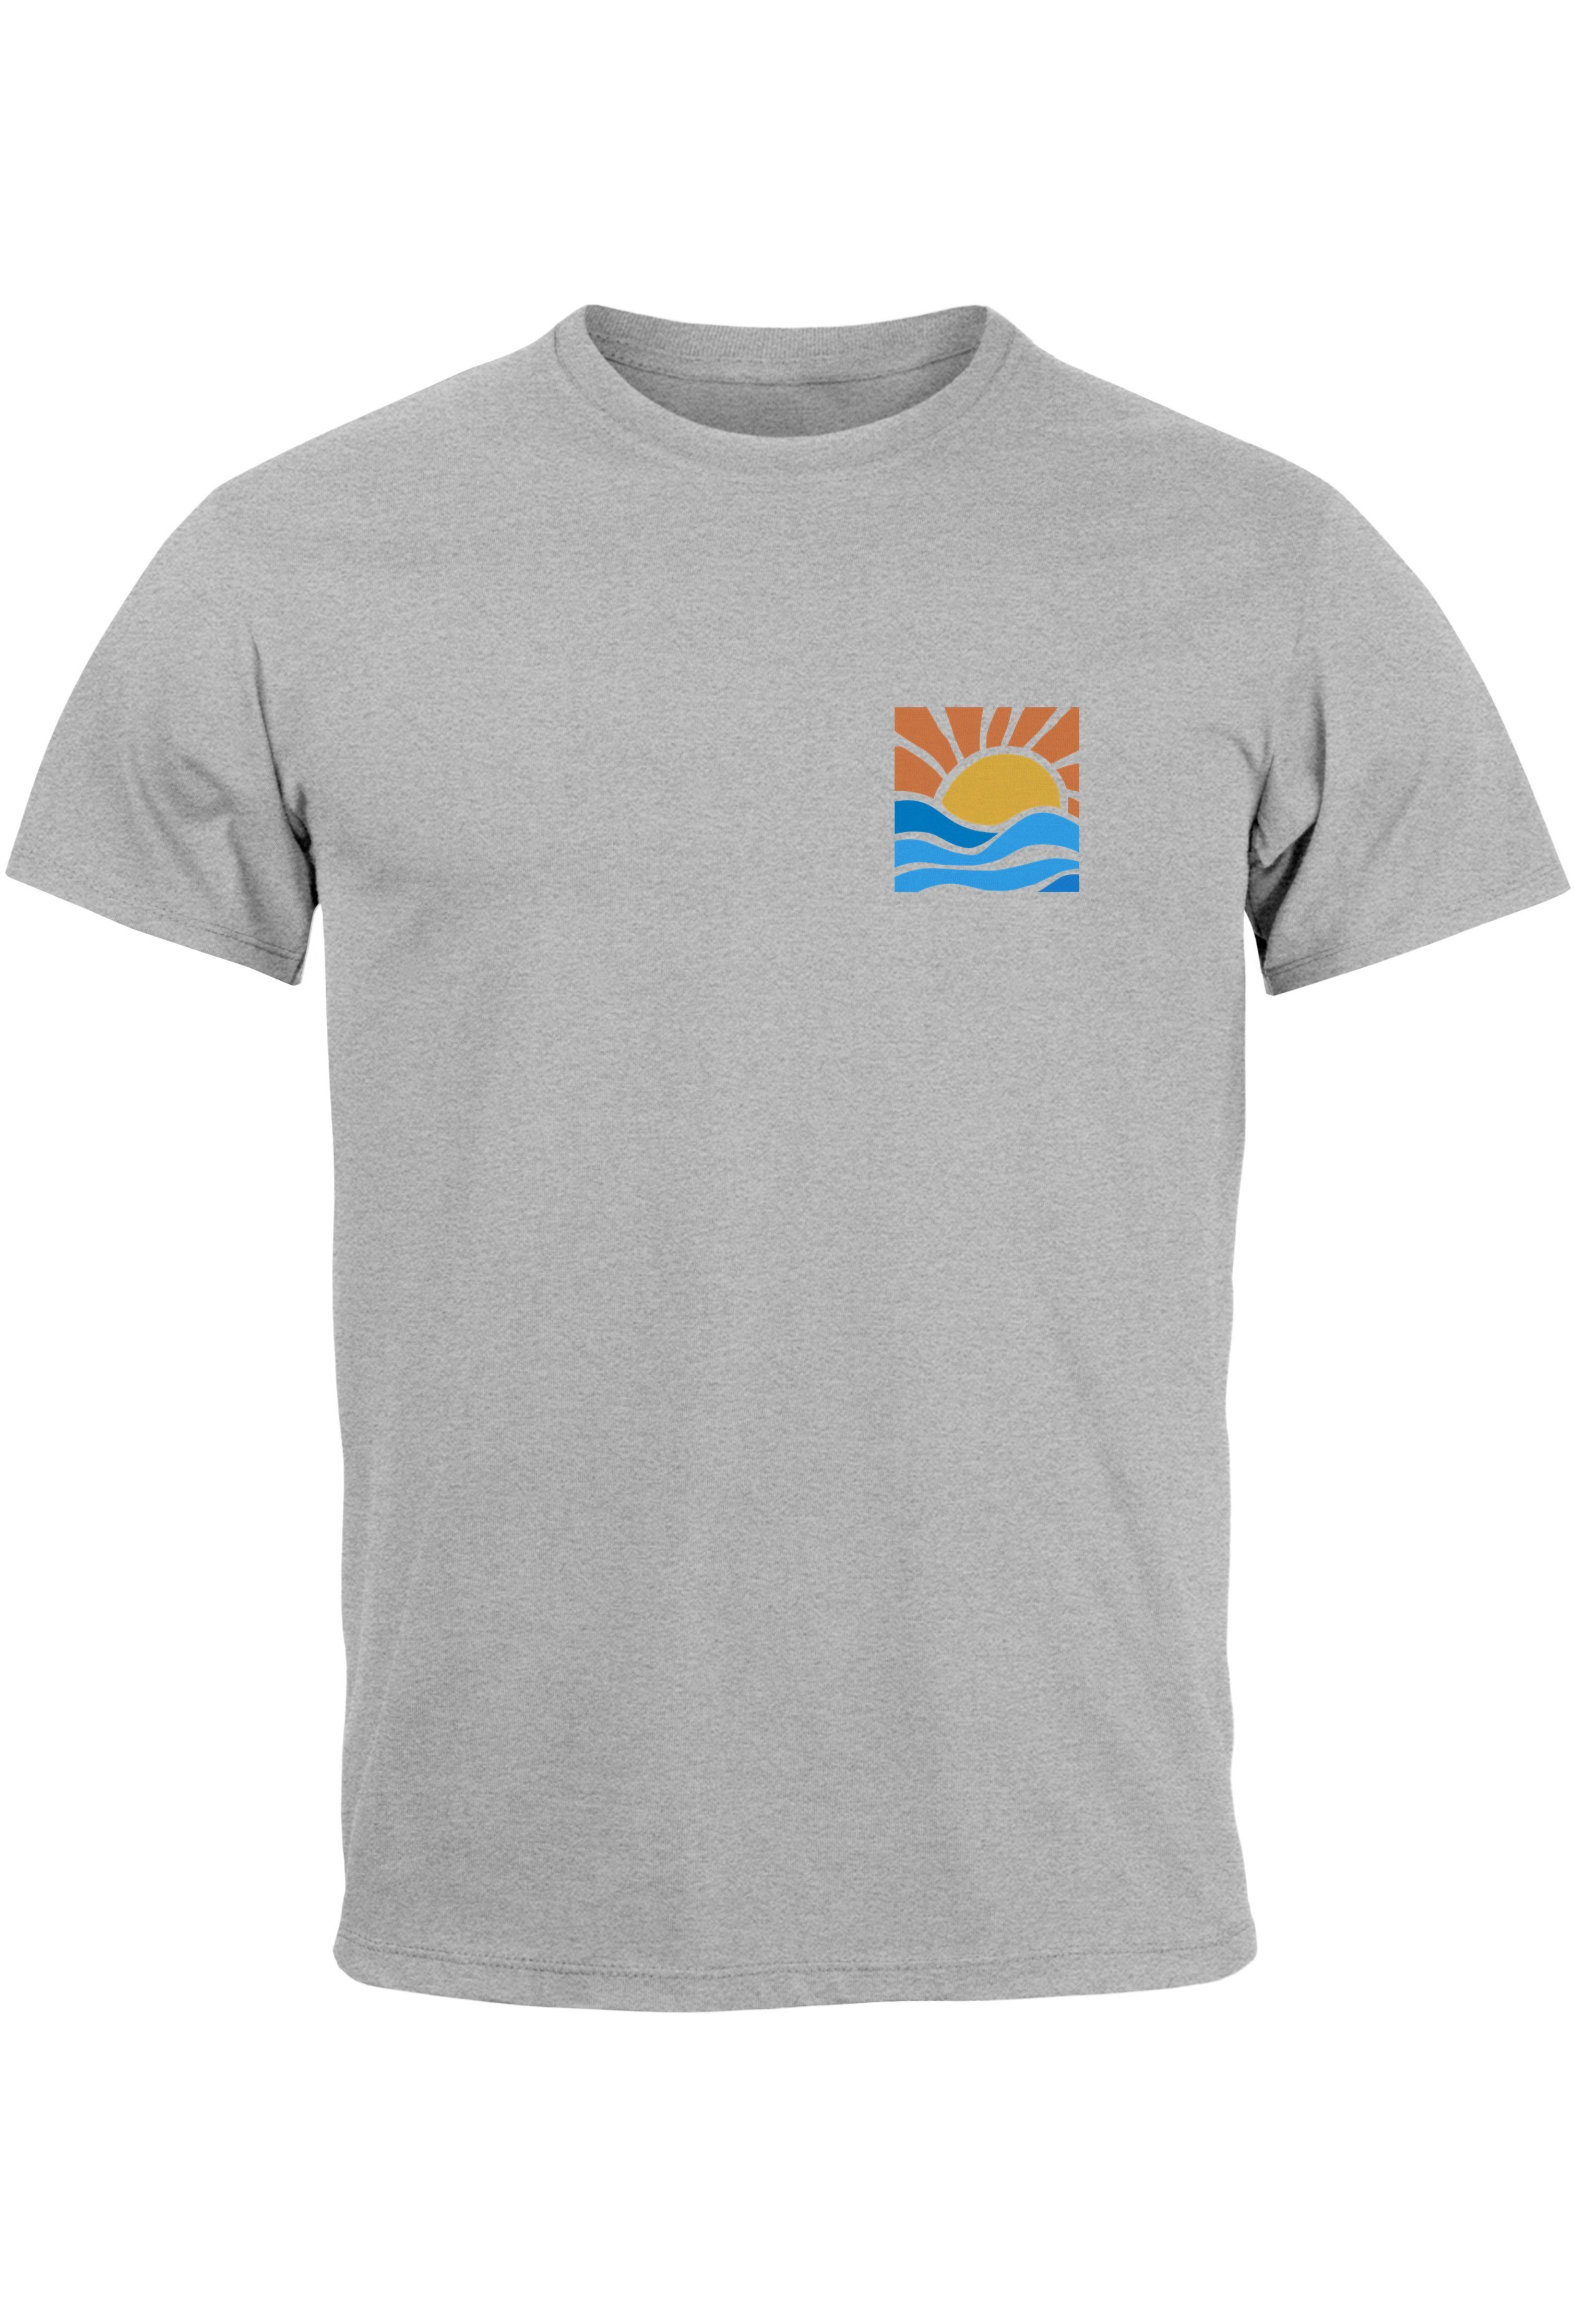 Print T-Shirt Beach mit Sommer Sonne Print Fashio grau Strand Style Herren Welle Print-Shirt Neverless Logo